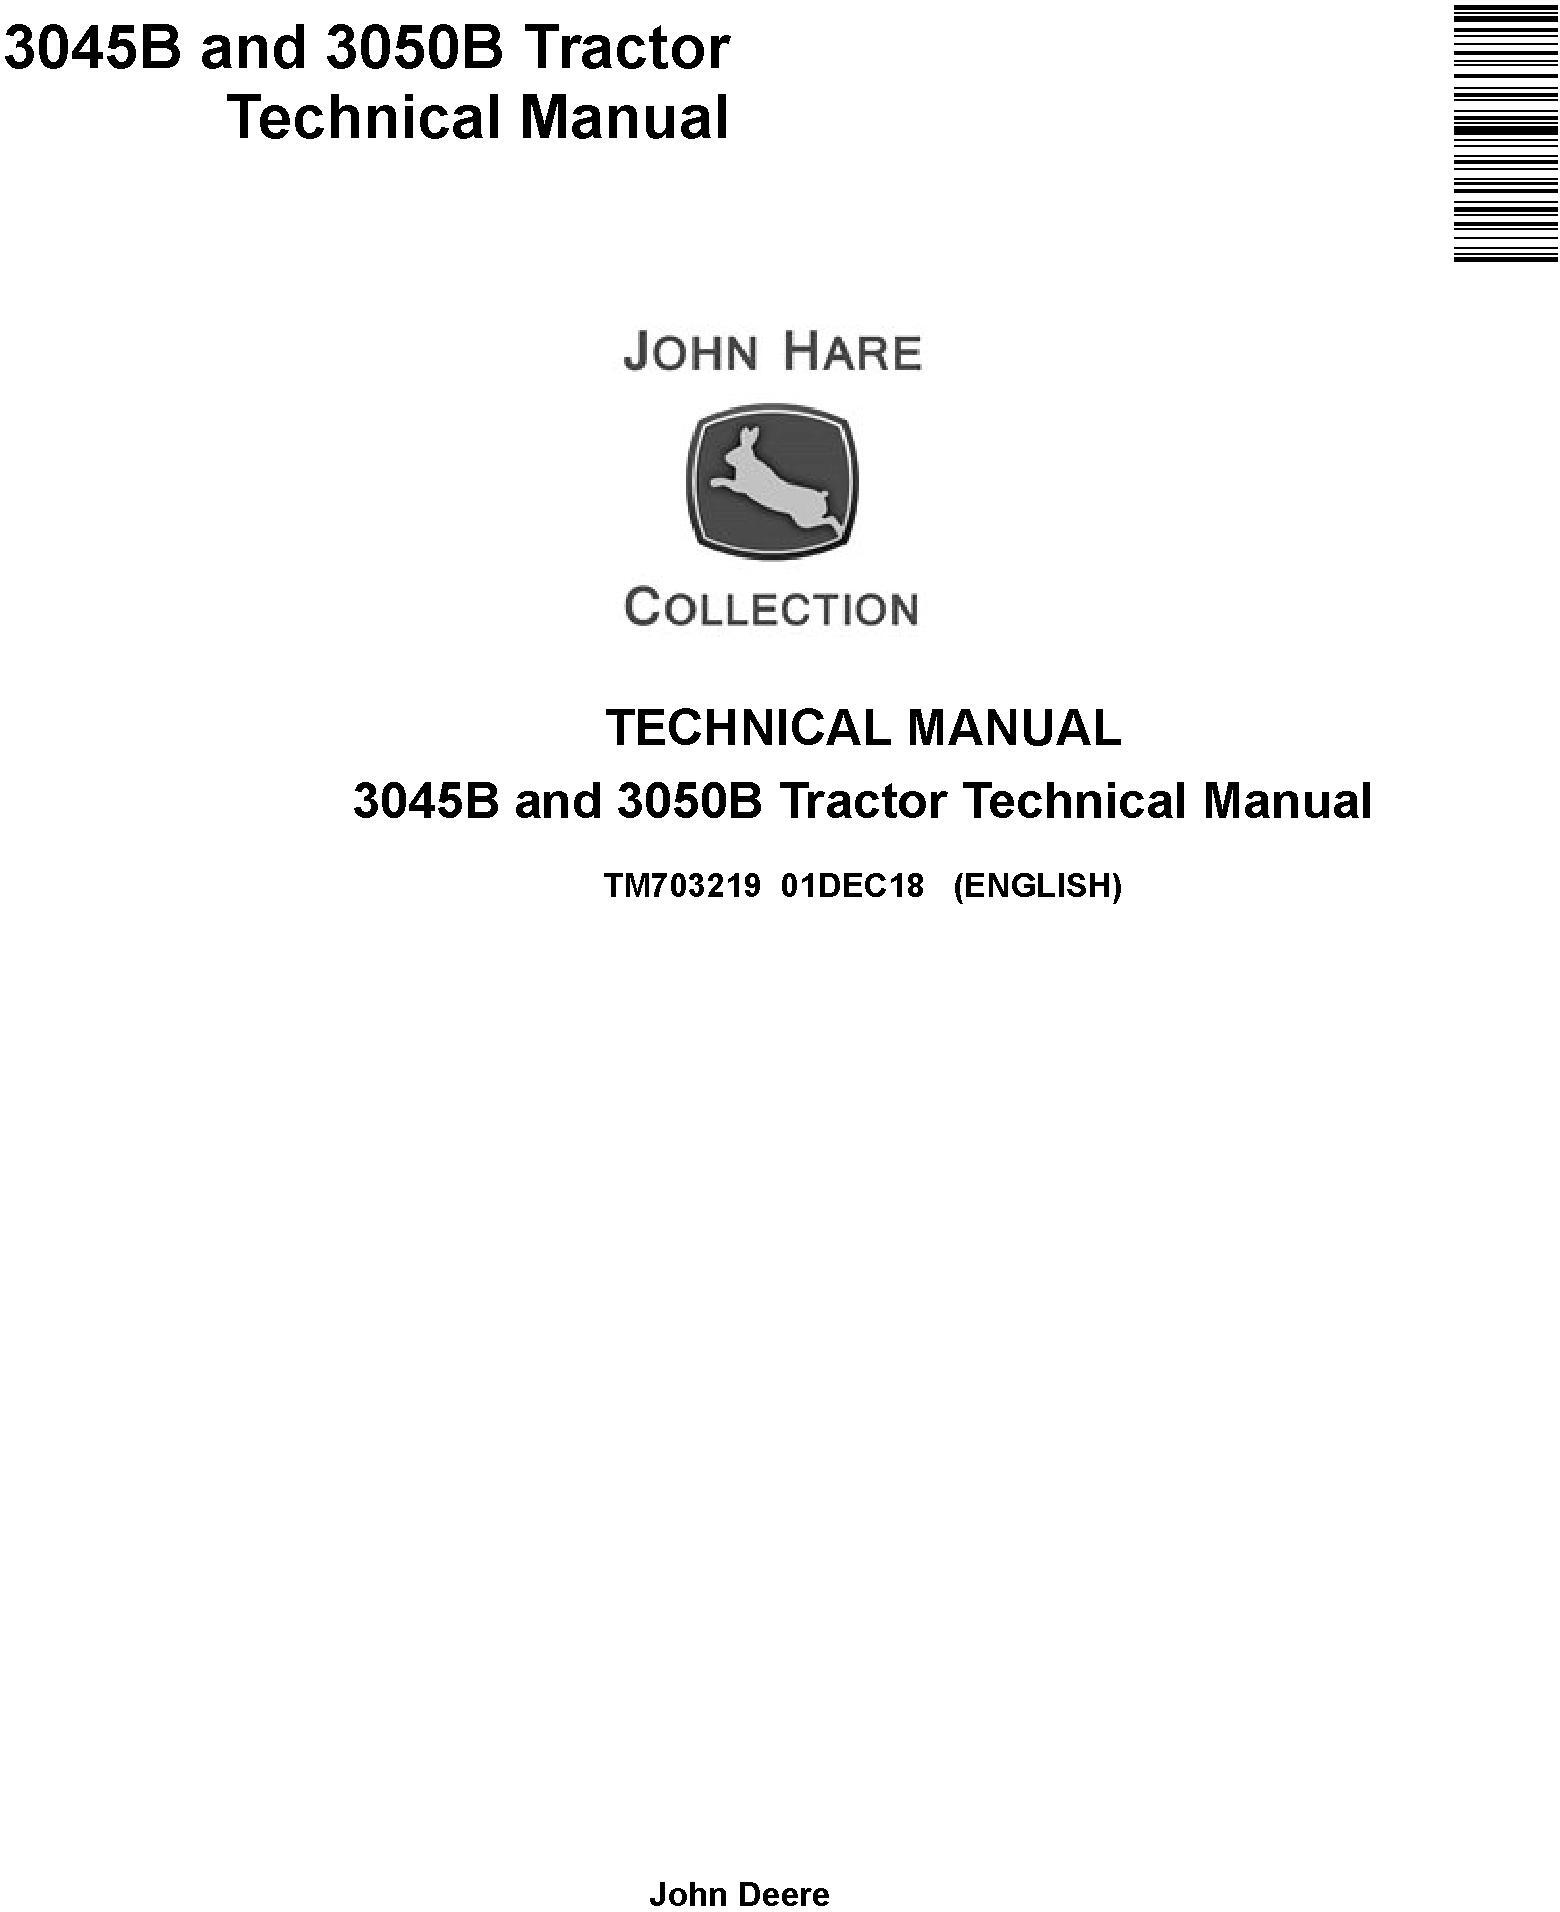 John Deere 3045B and 3050B Tractors Technical Service Manual (TM703219) - 19104